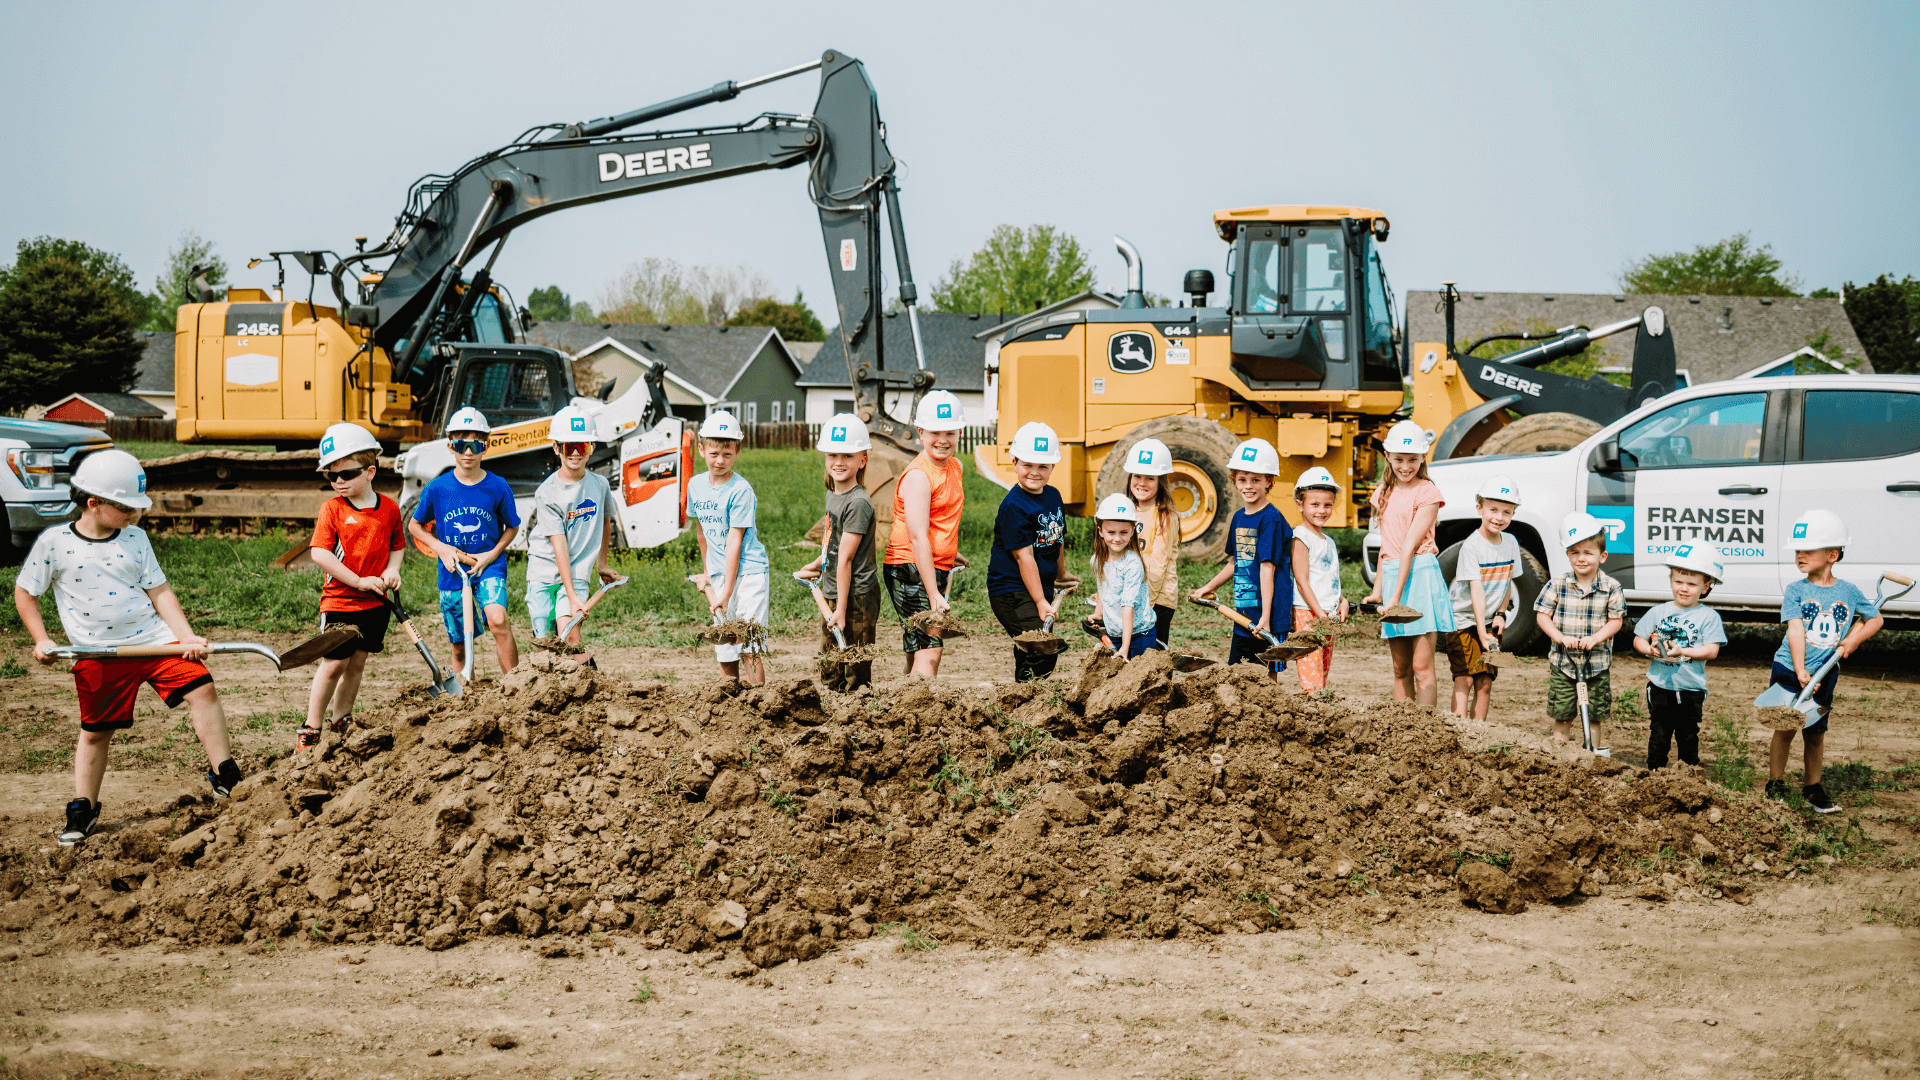 Kids shoveling dirt at a groundbreaking.